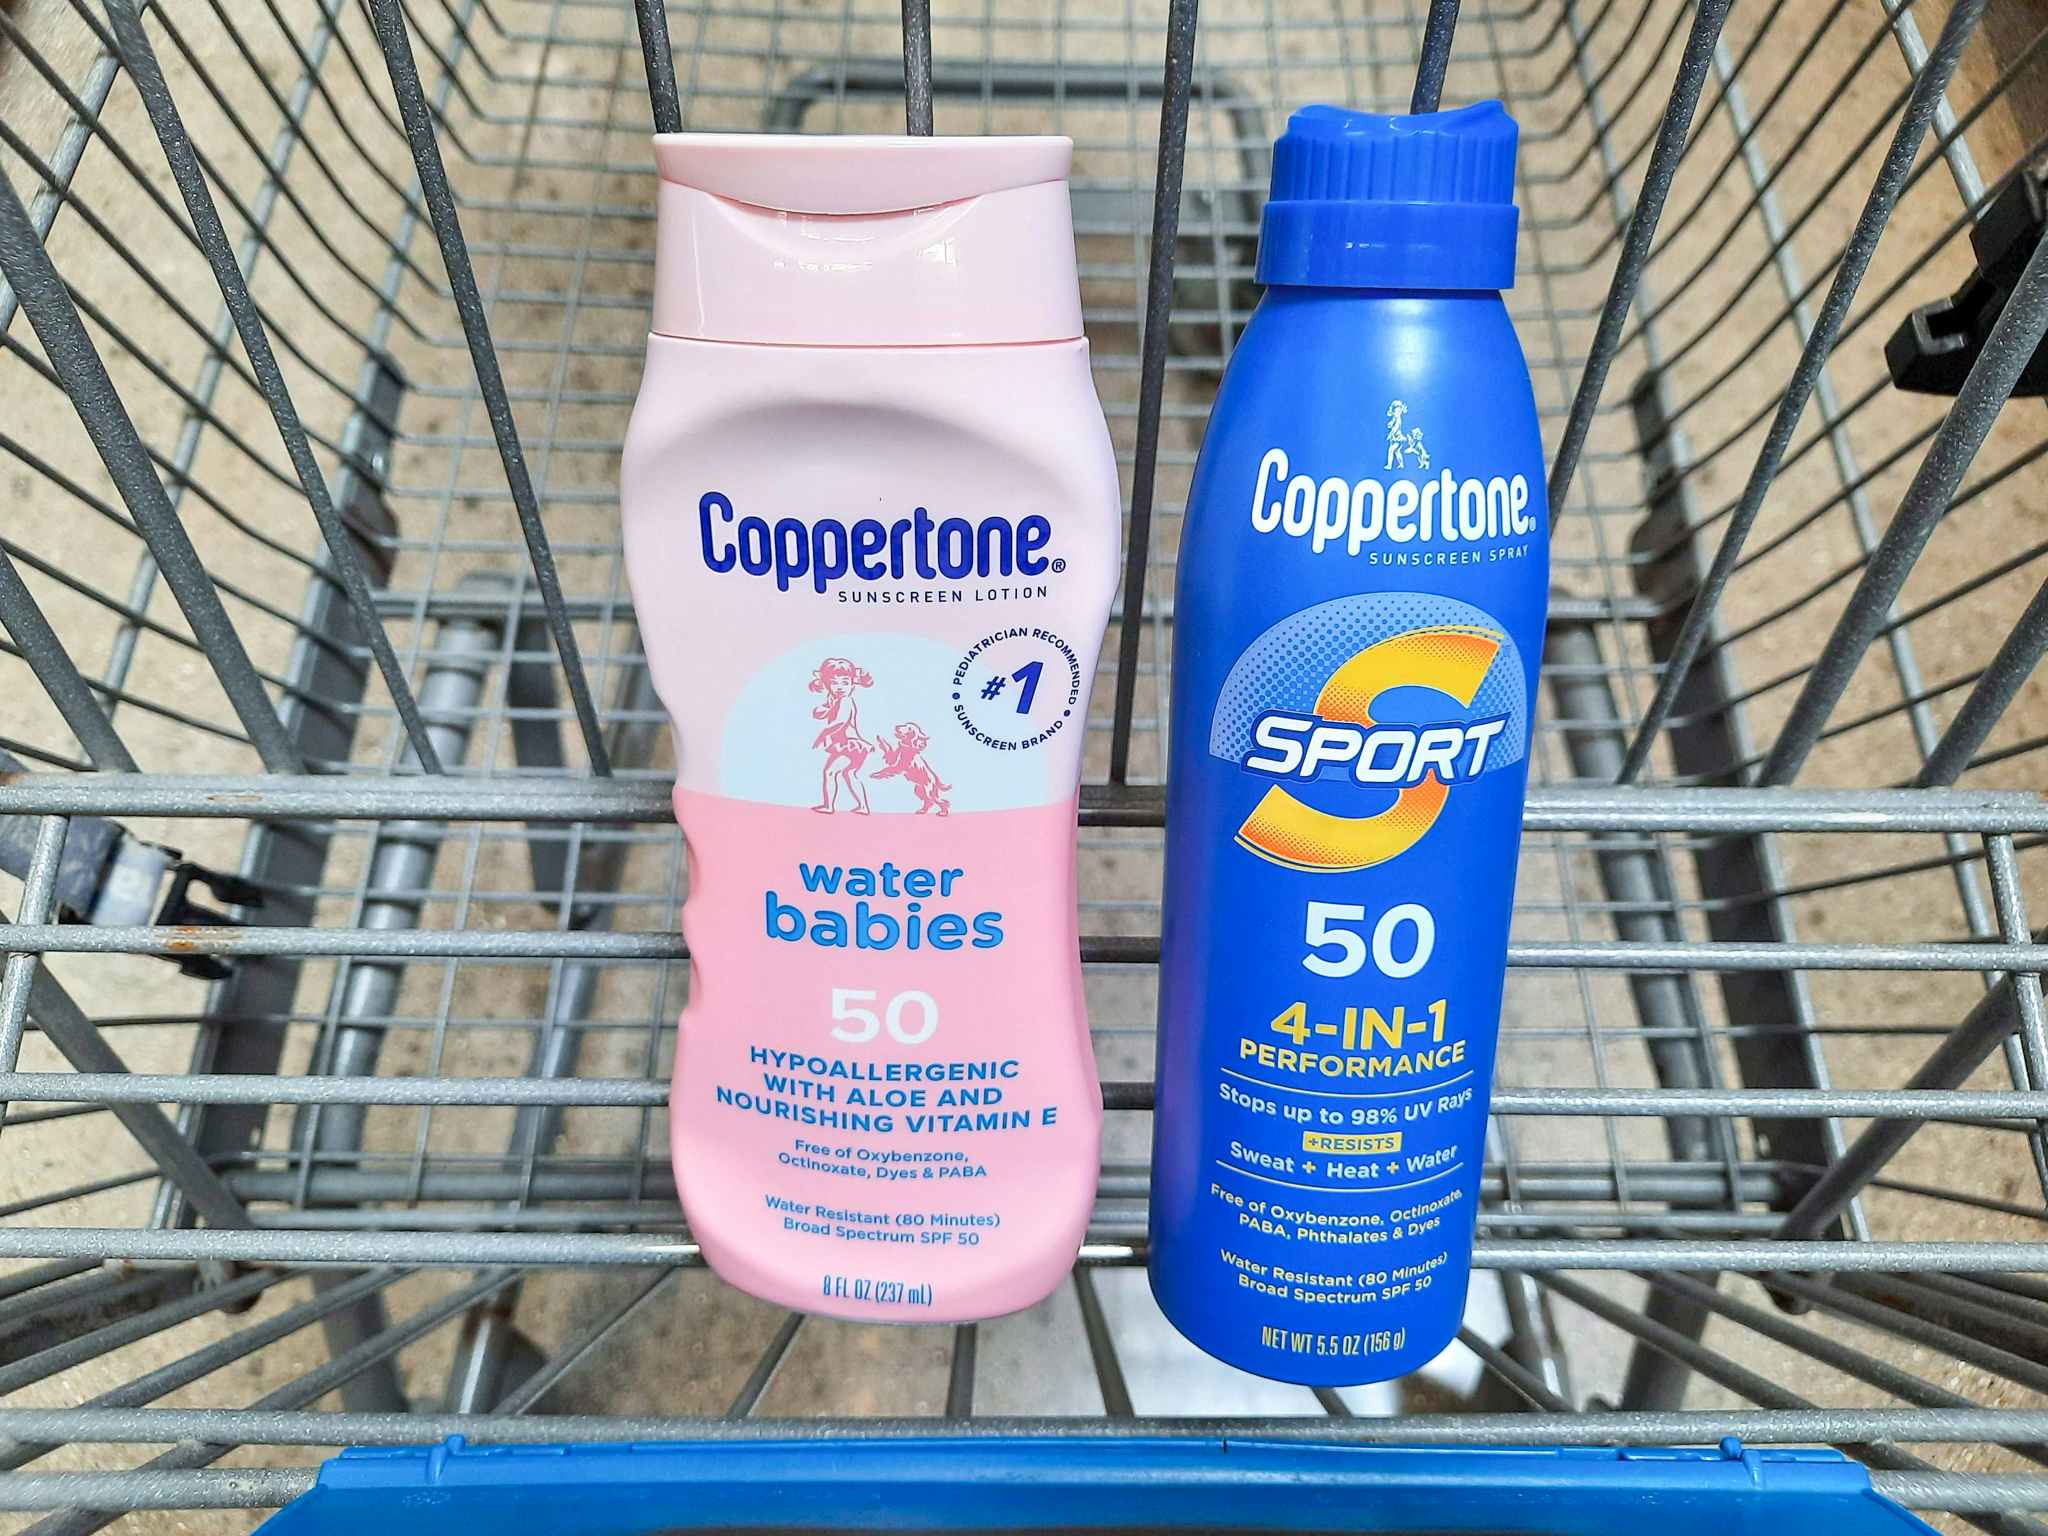 Coppertone Sport & Water Babies Sun Screen products in Walmart shopping cart